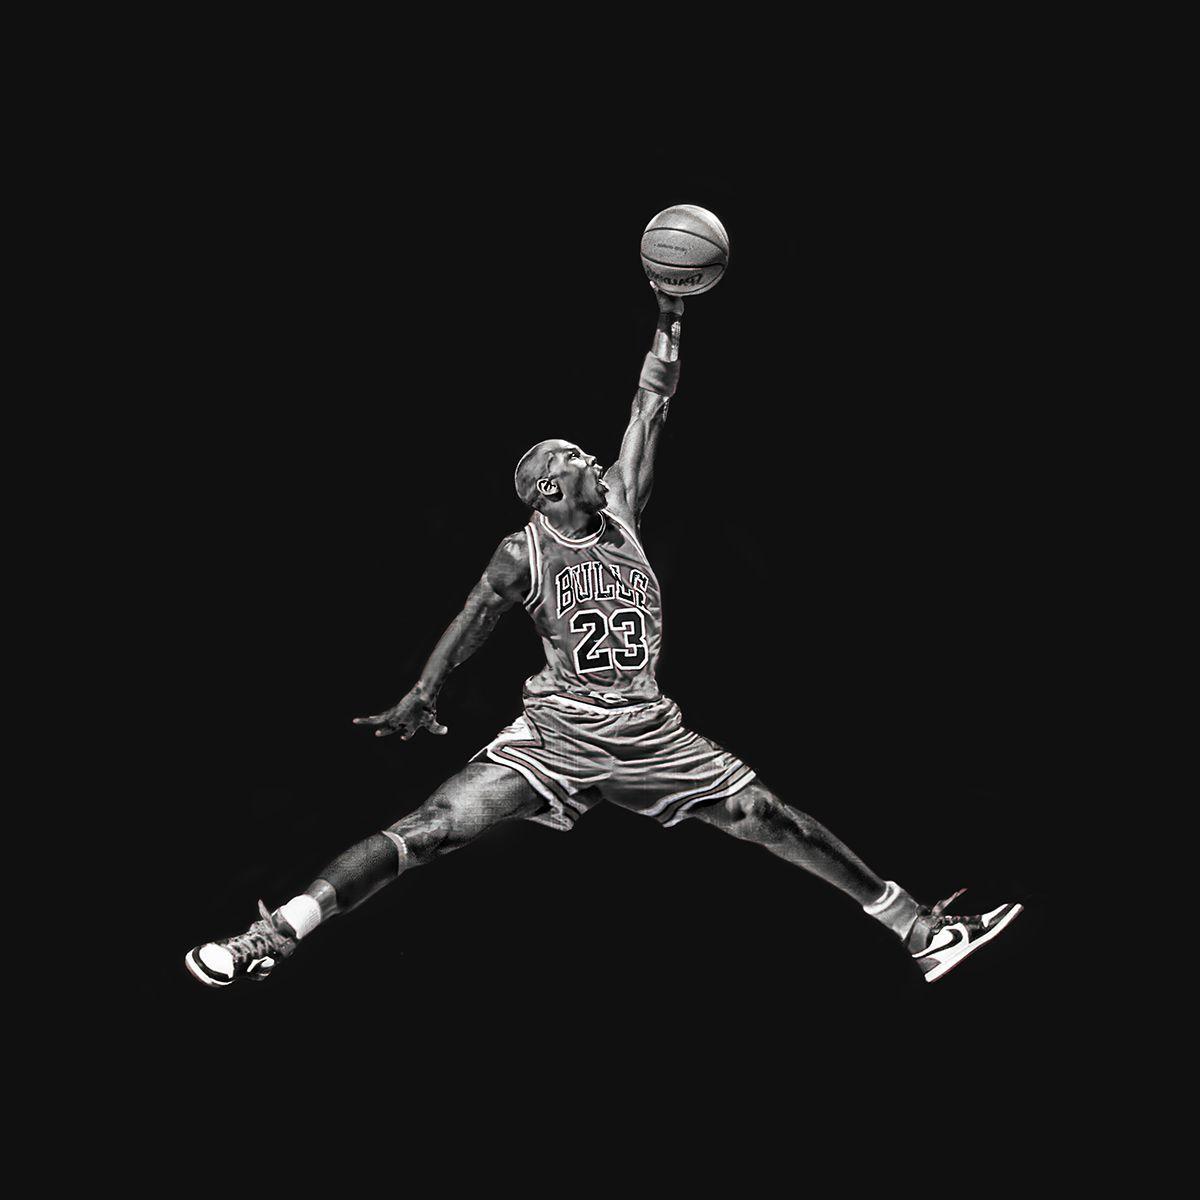 Jordan Jumpman 23 Logo - Jumpman Logo in Real Life on Behance | Sports Design | Pinterest ...